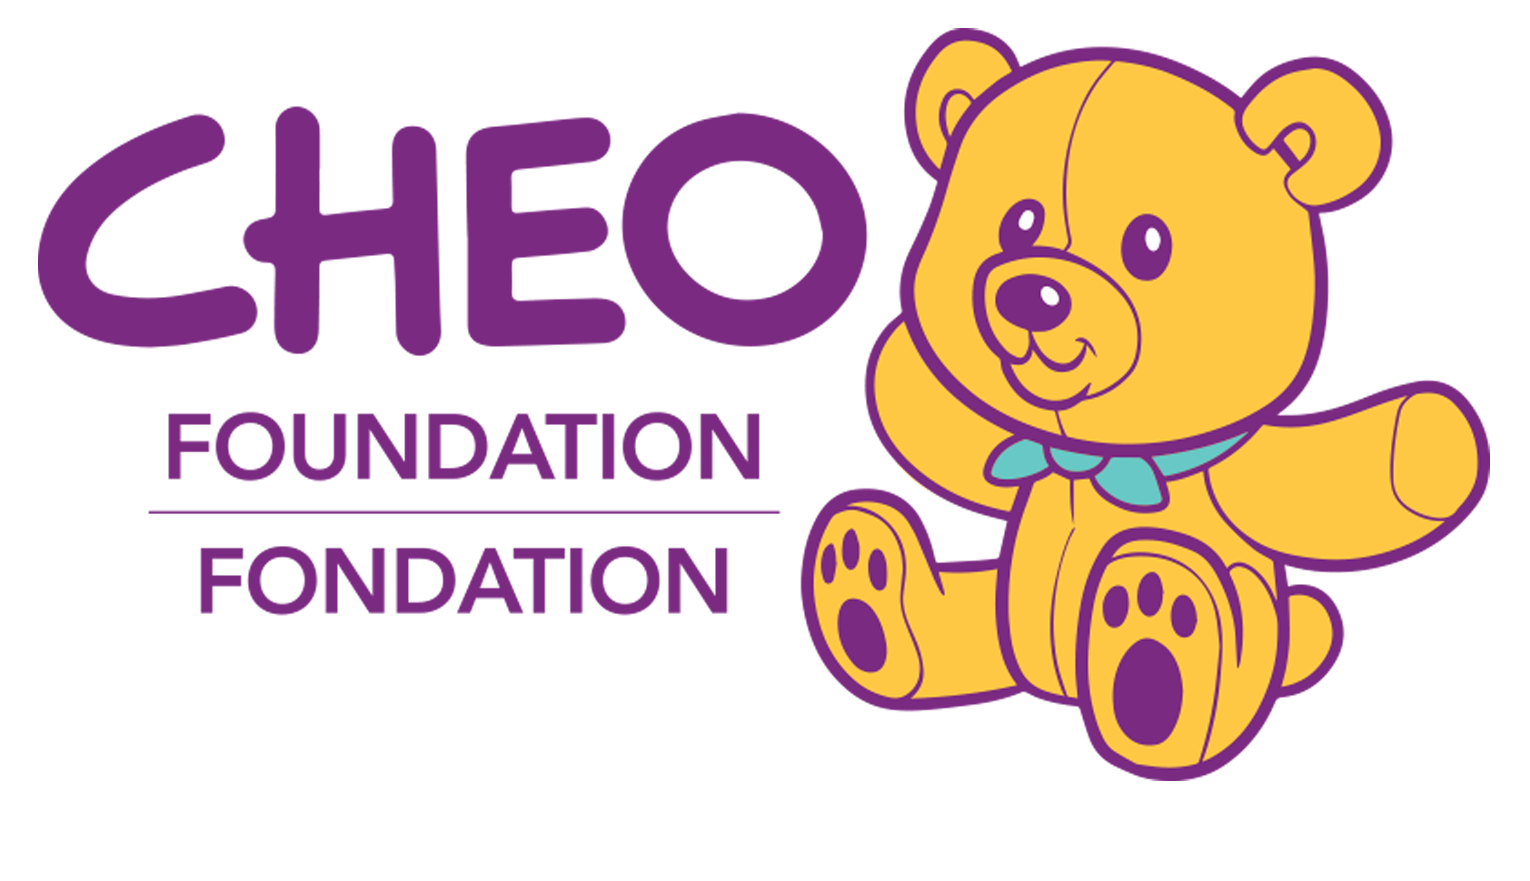 Cheo Foundation